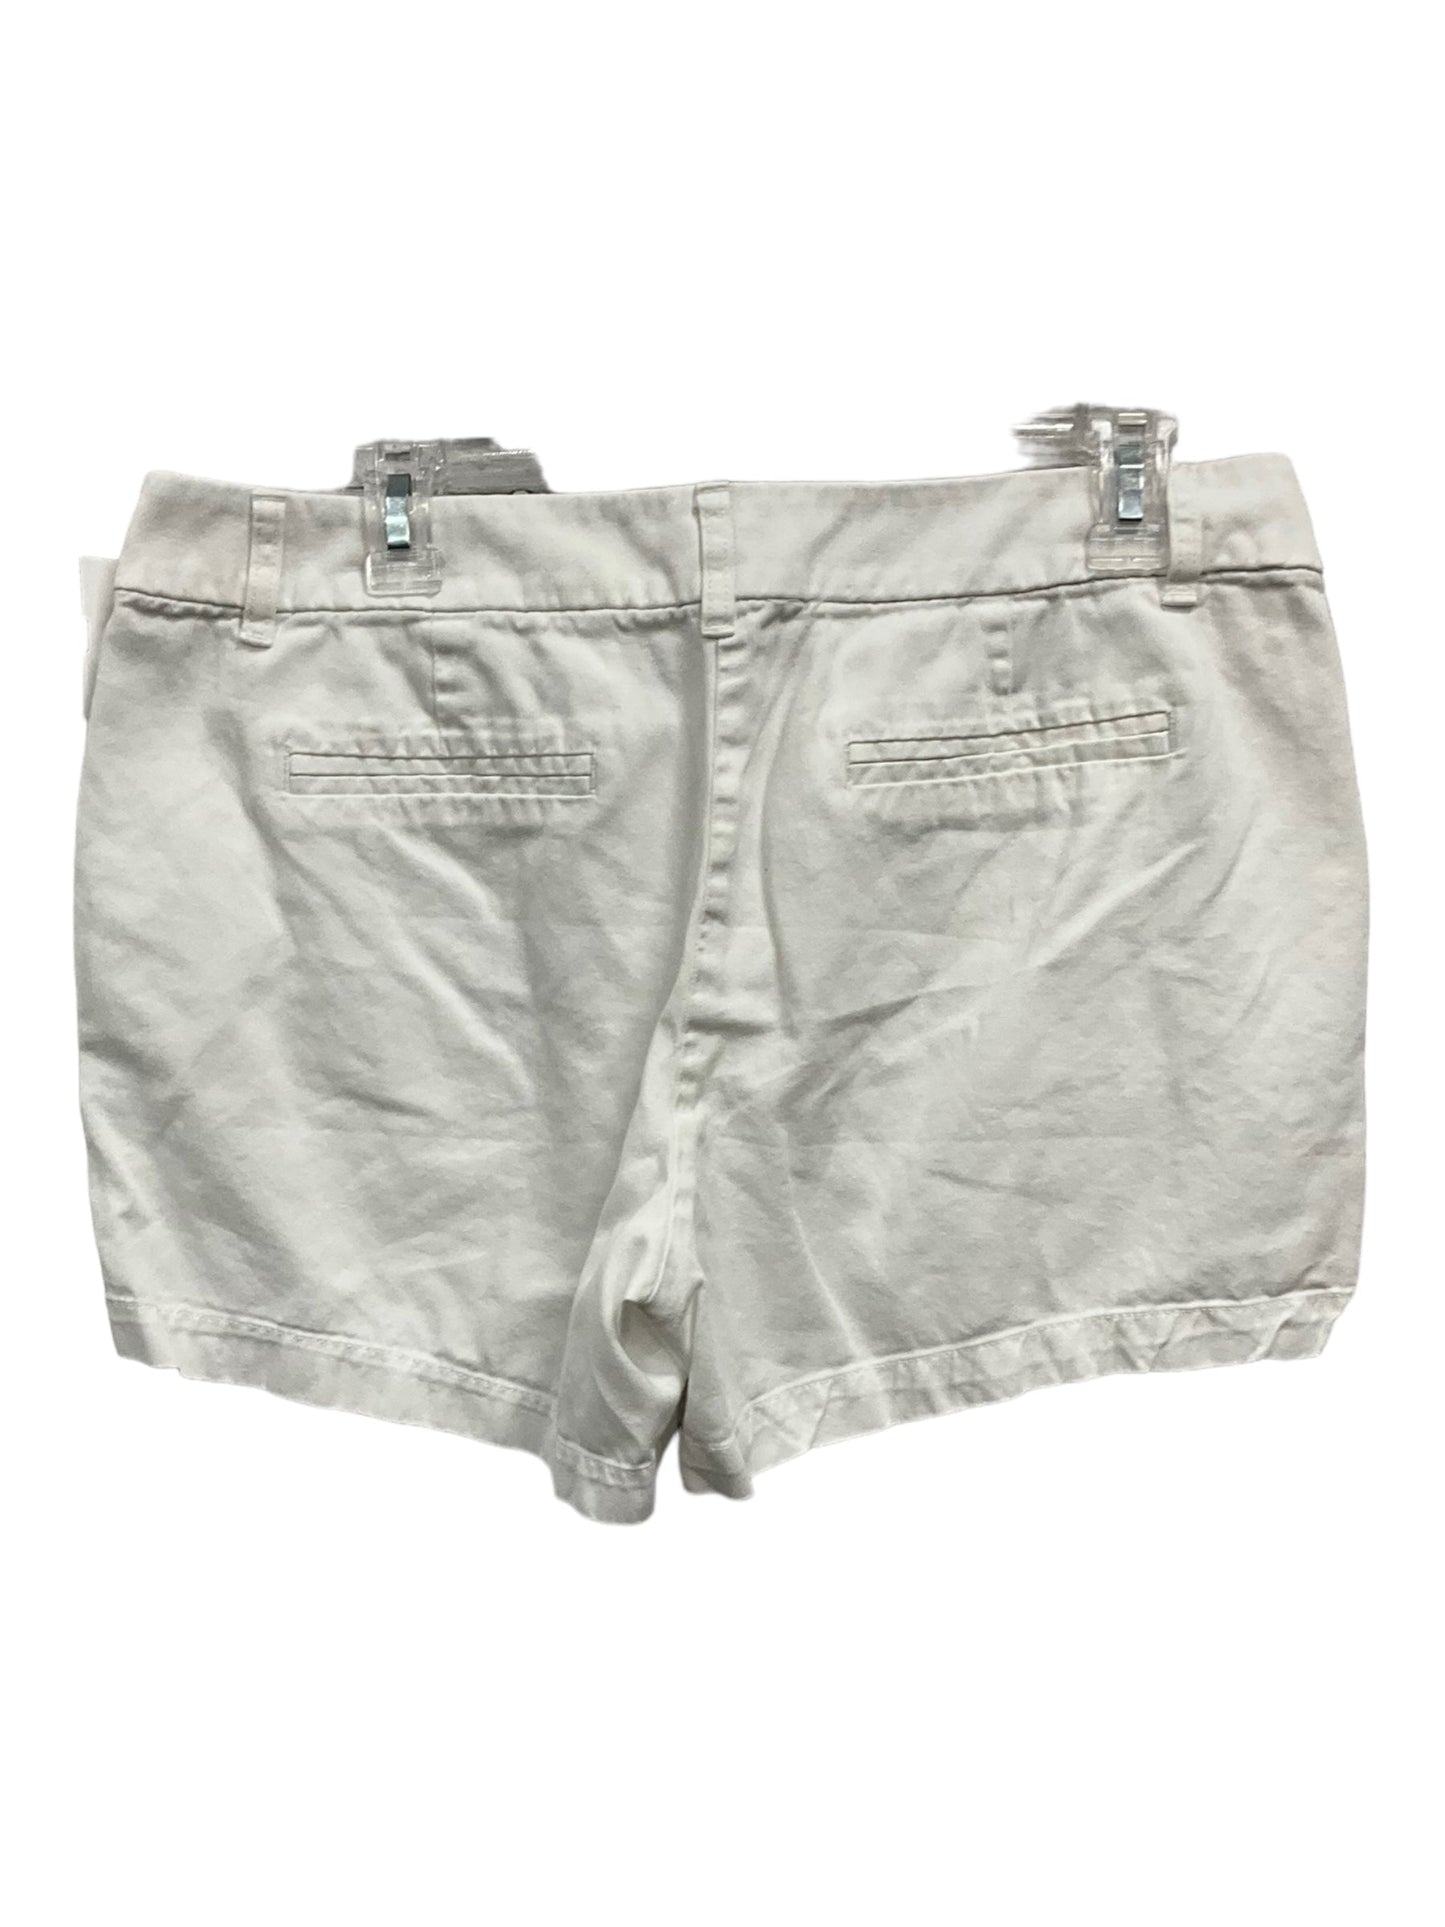 White Shorts J. Crew, Size 10